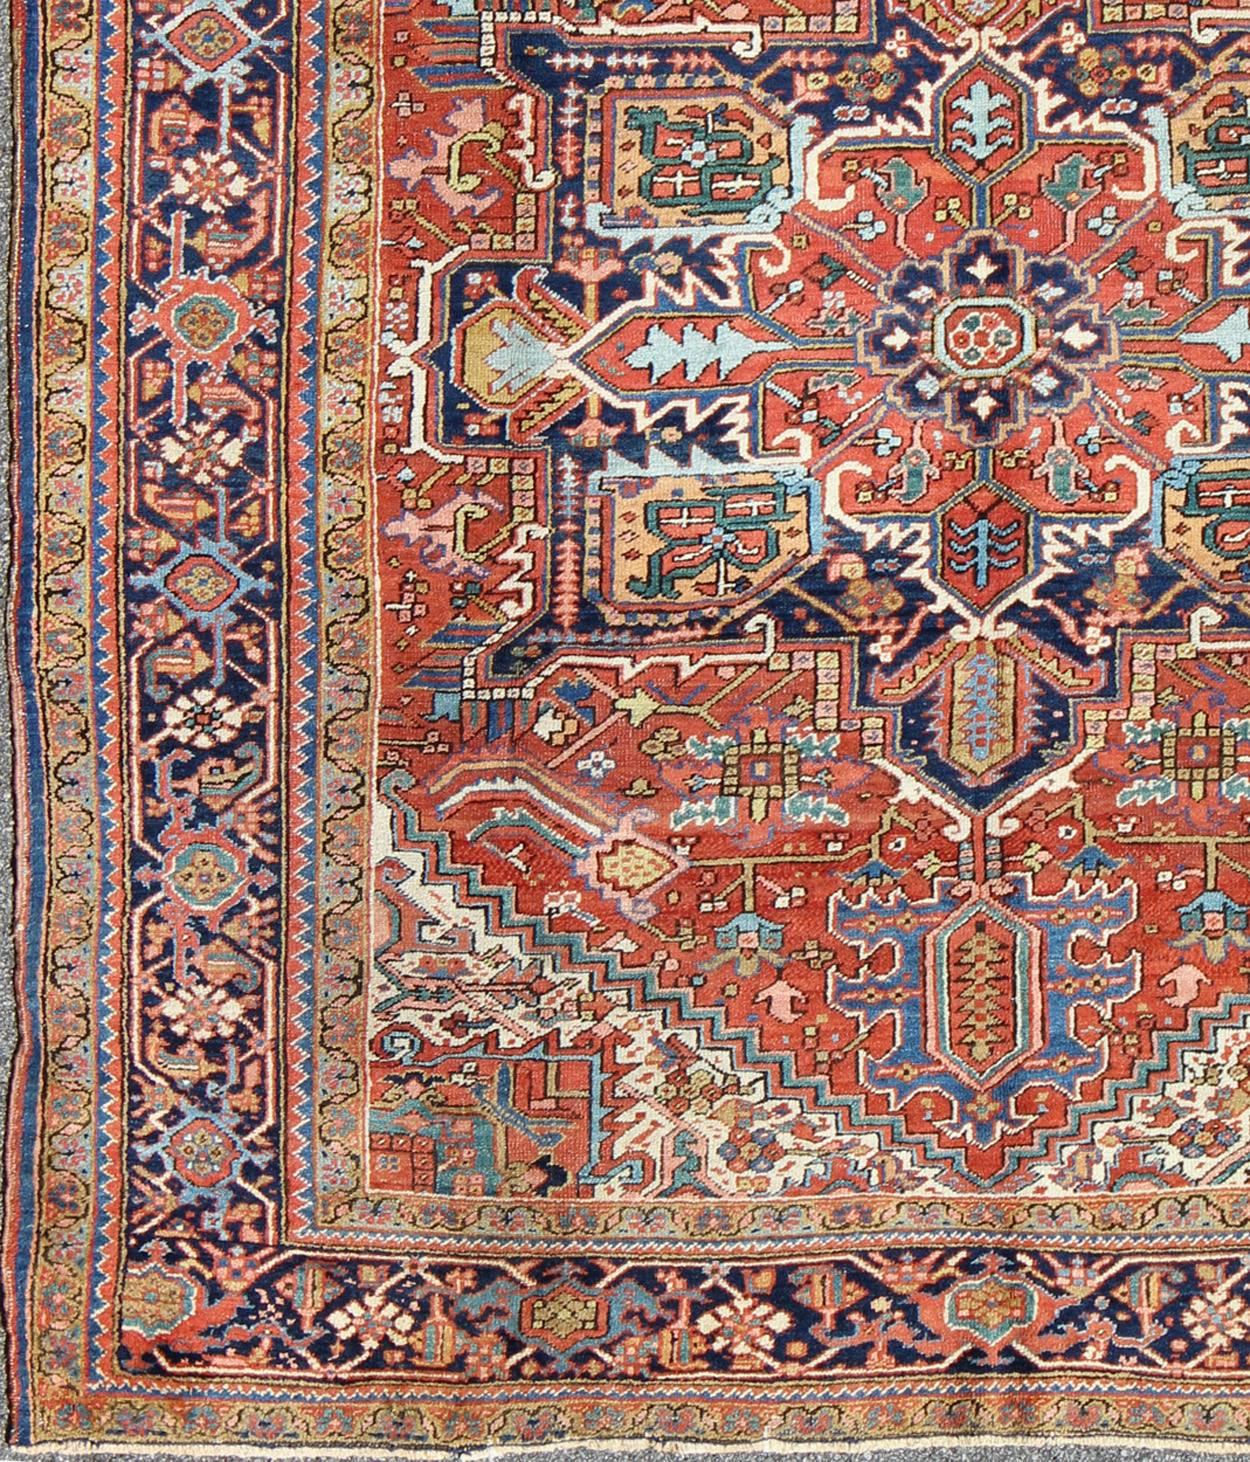  Antique Colorful Persian Heriz Rug with Geometric Patterns and Intricate Design. Keivan Woven Arts / rug D-0927, country of origin / type: Iran / Heriz, Heriz-Serapi , circa 1920  

 Measures: 8'3 x 10'4                                 

This